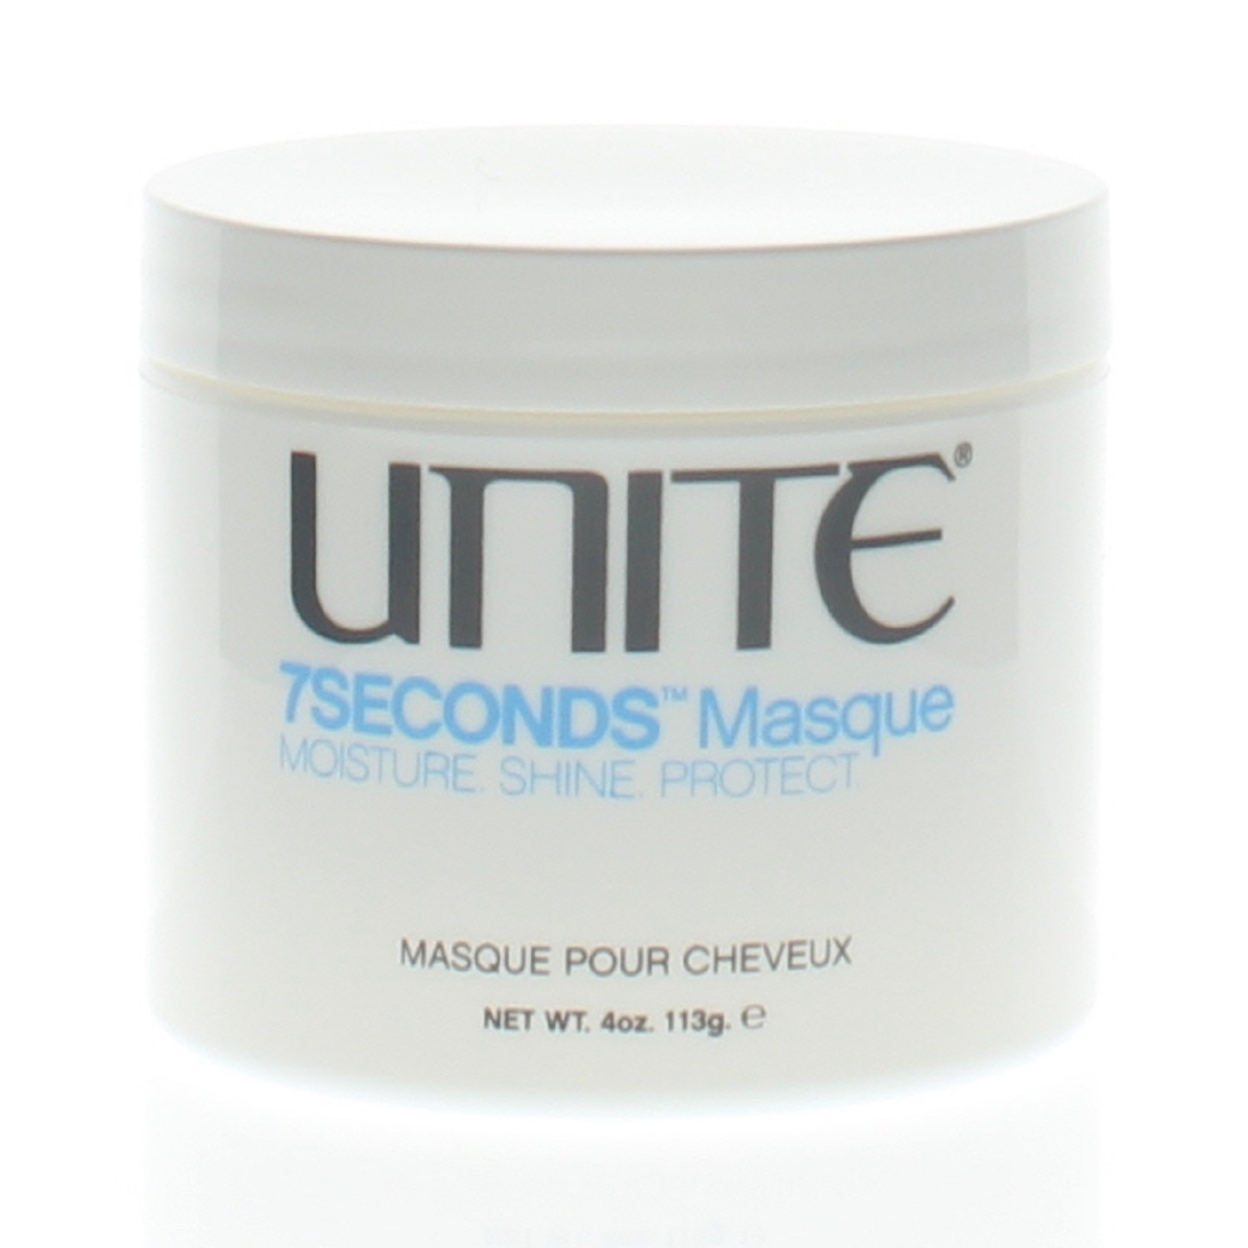 Unite 7Seconds Masque 4oz/113g